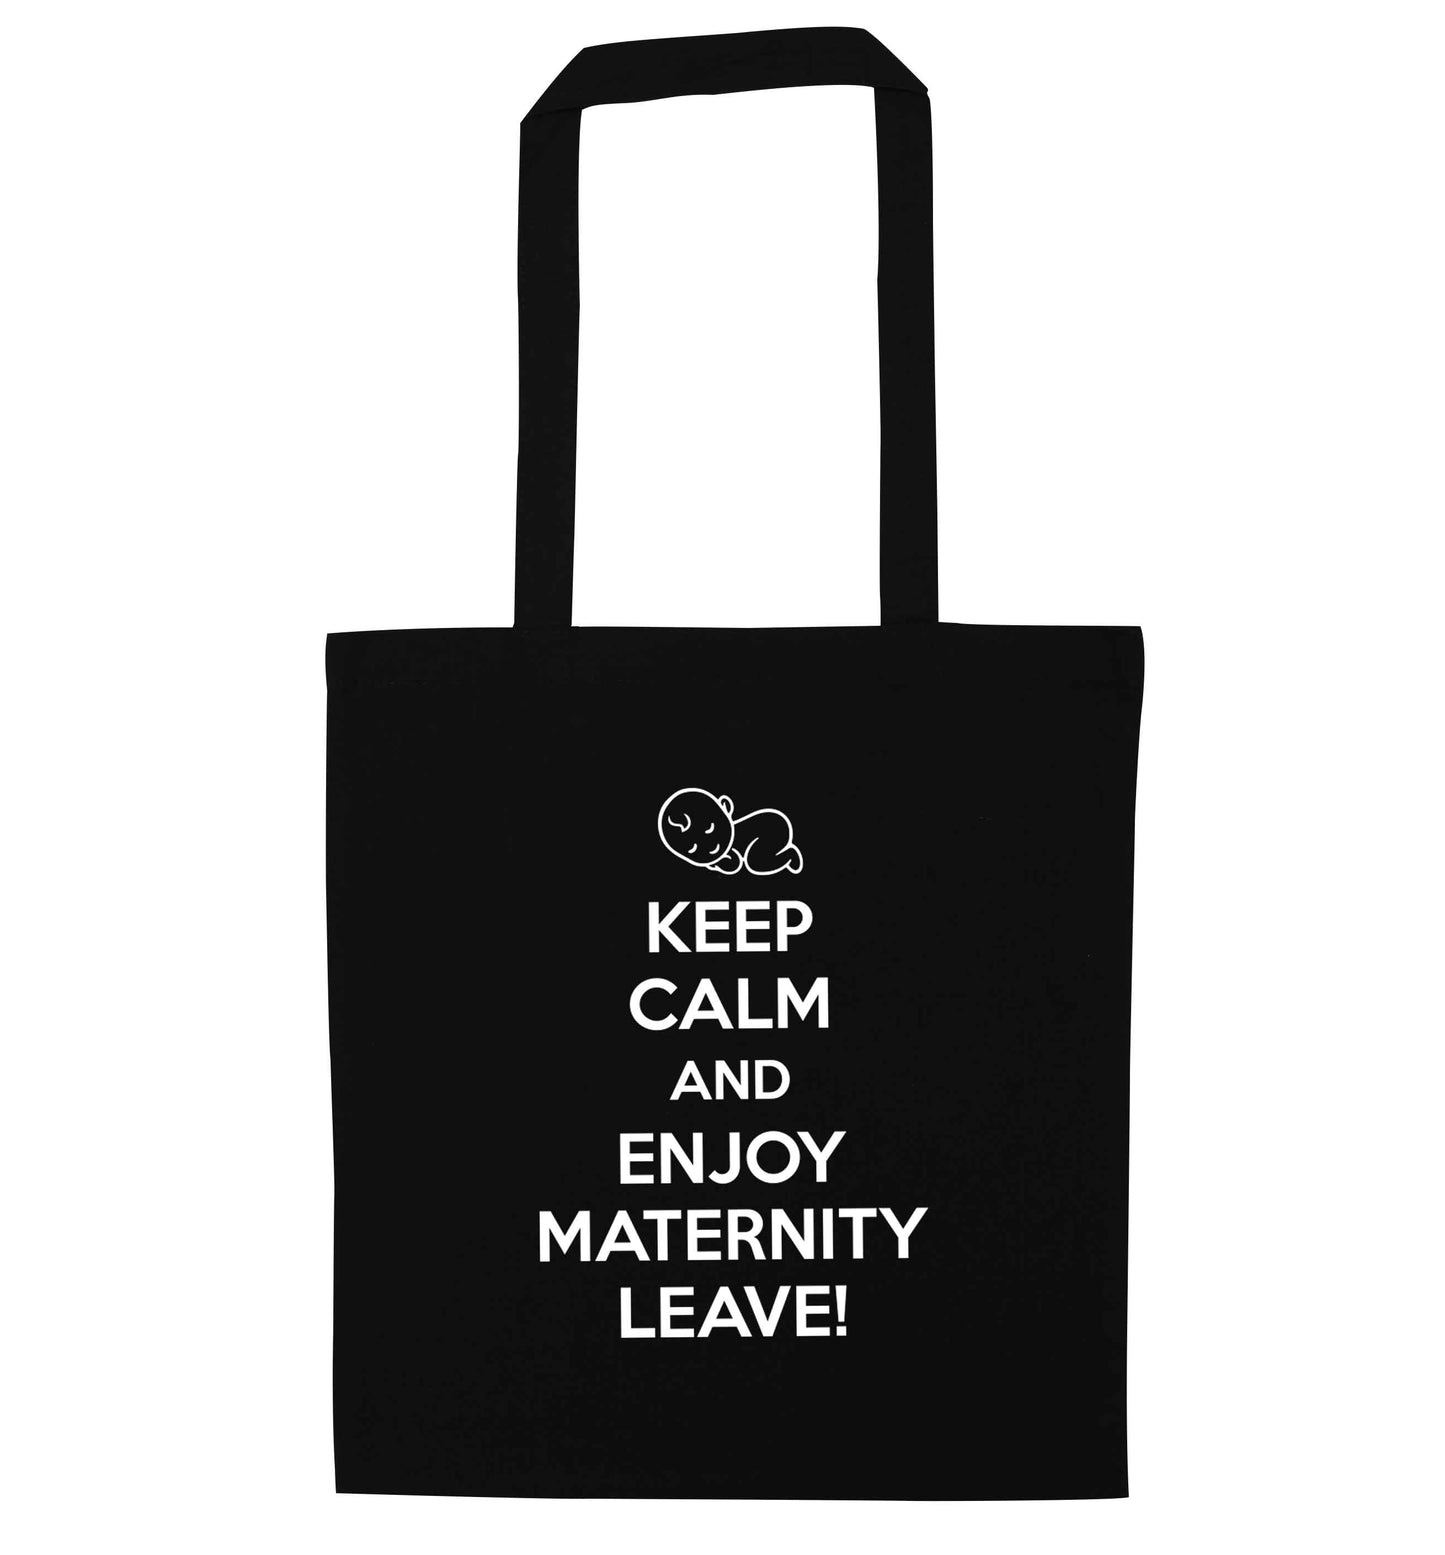 Keep calm and enjoy maternity leave black tote bag